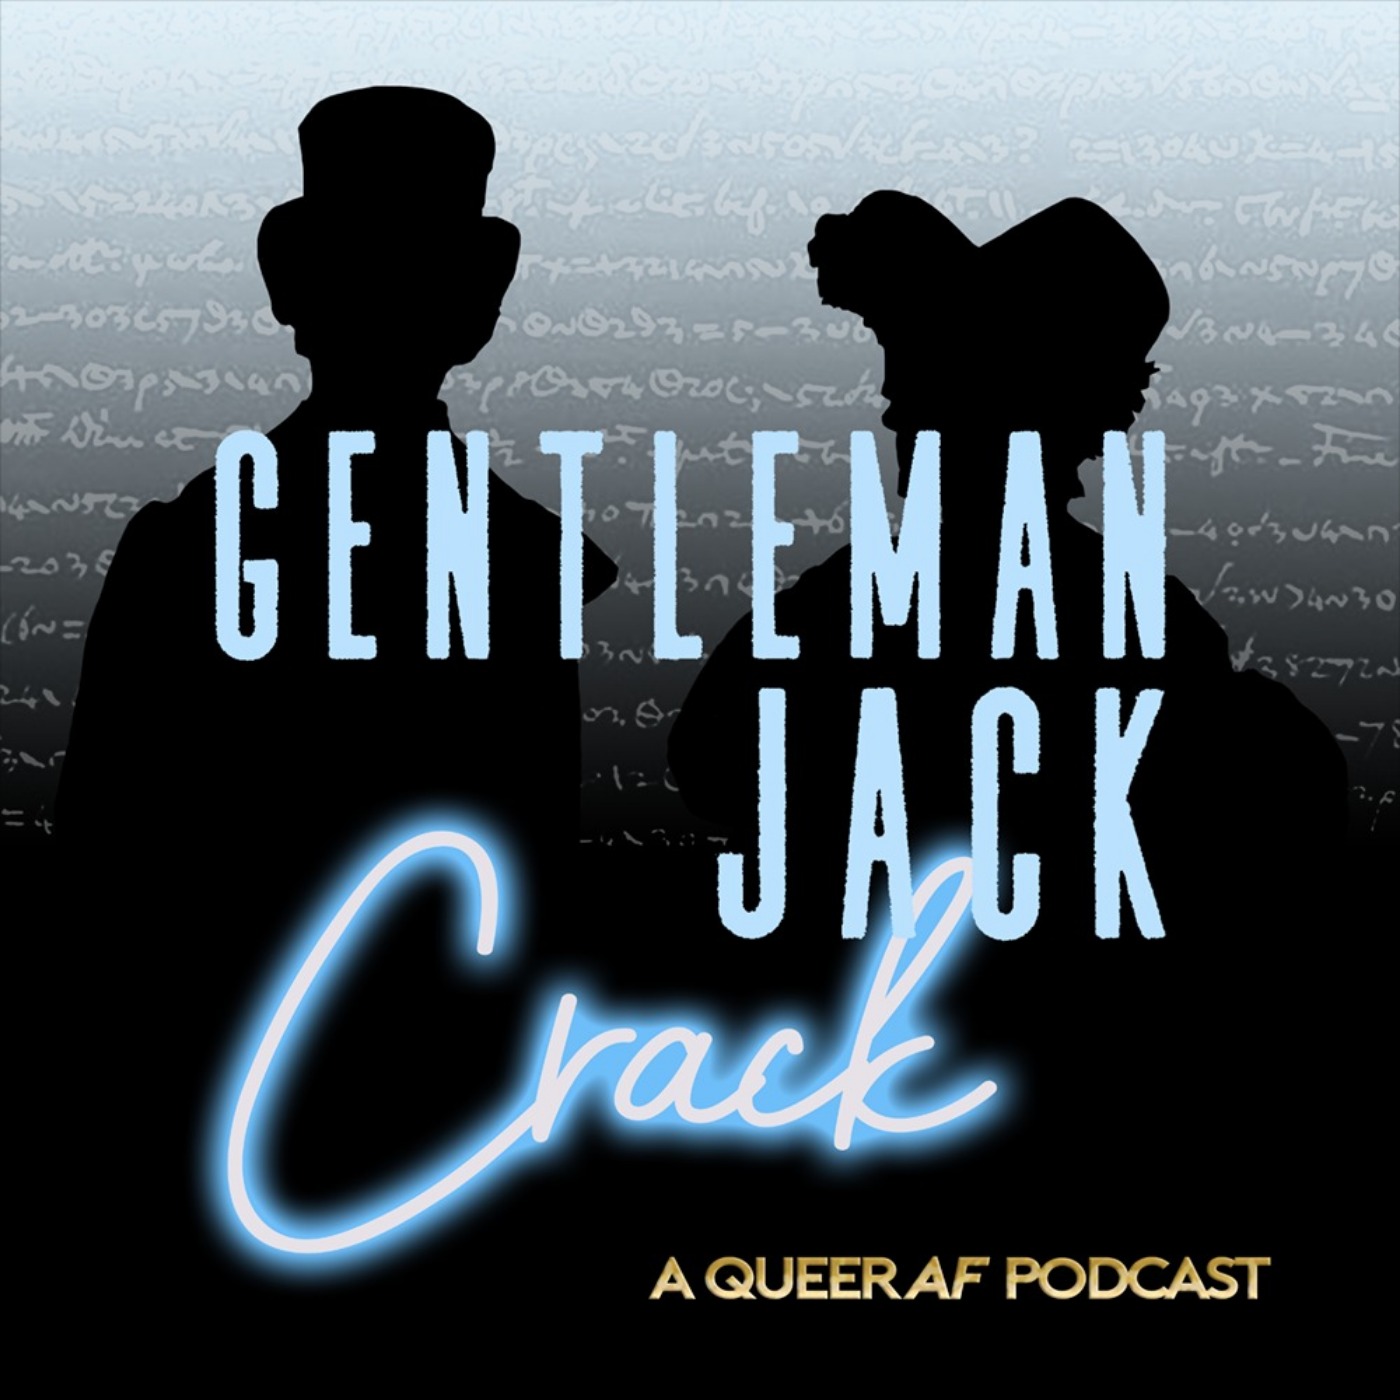 Gentleman Jack Crack - "Why've You Brought That?" Part III